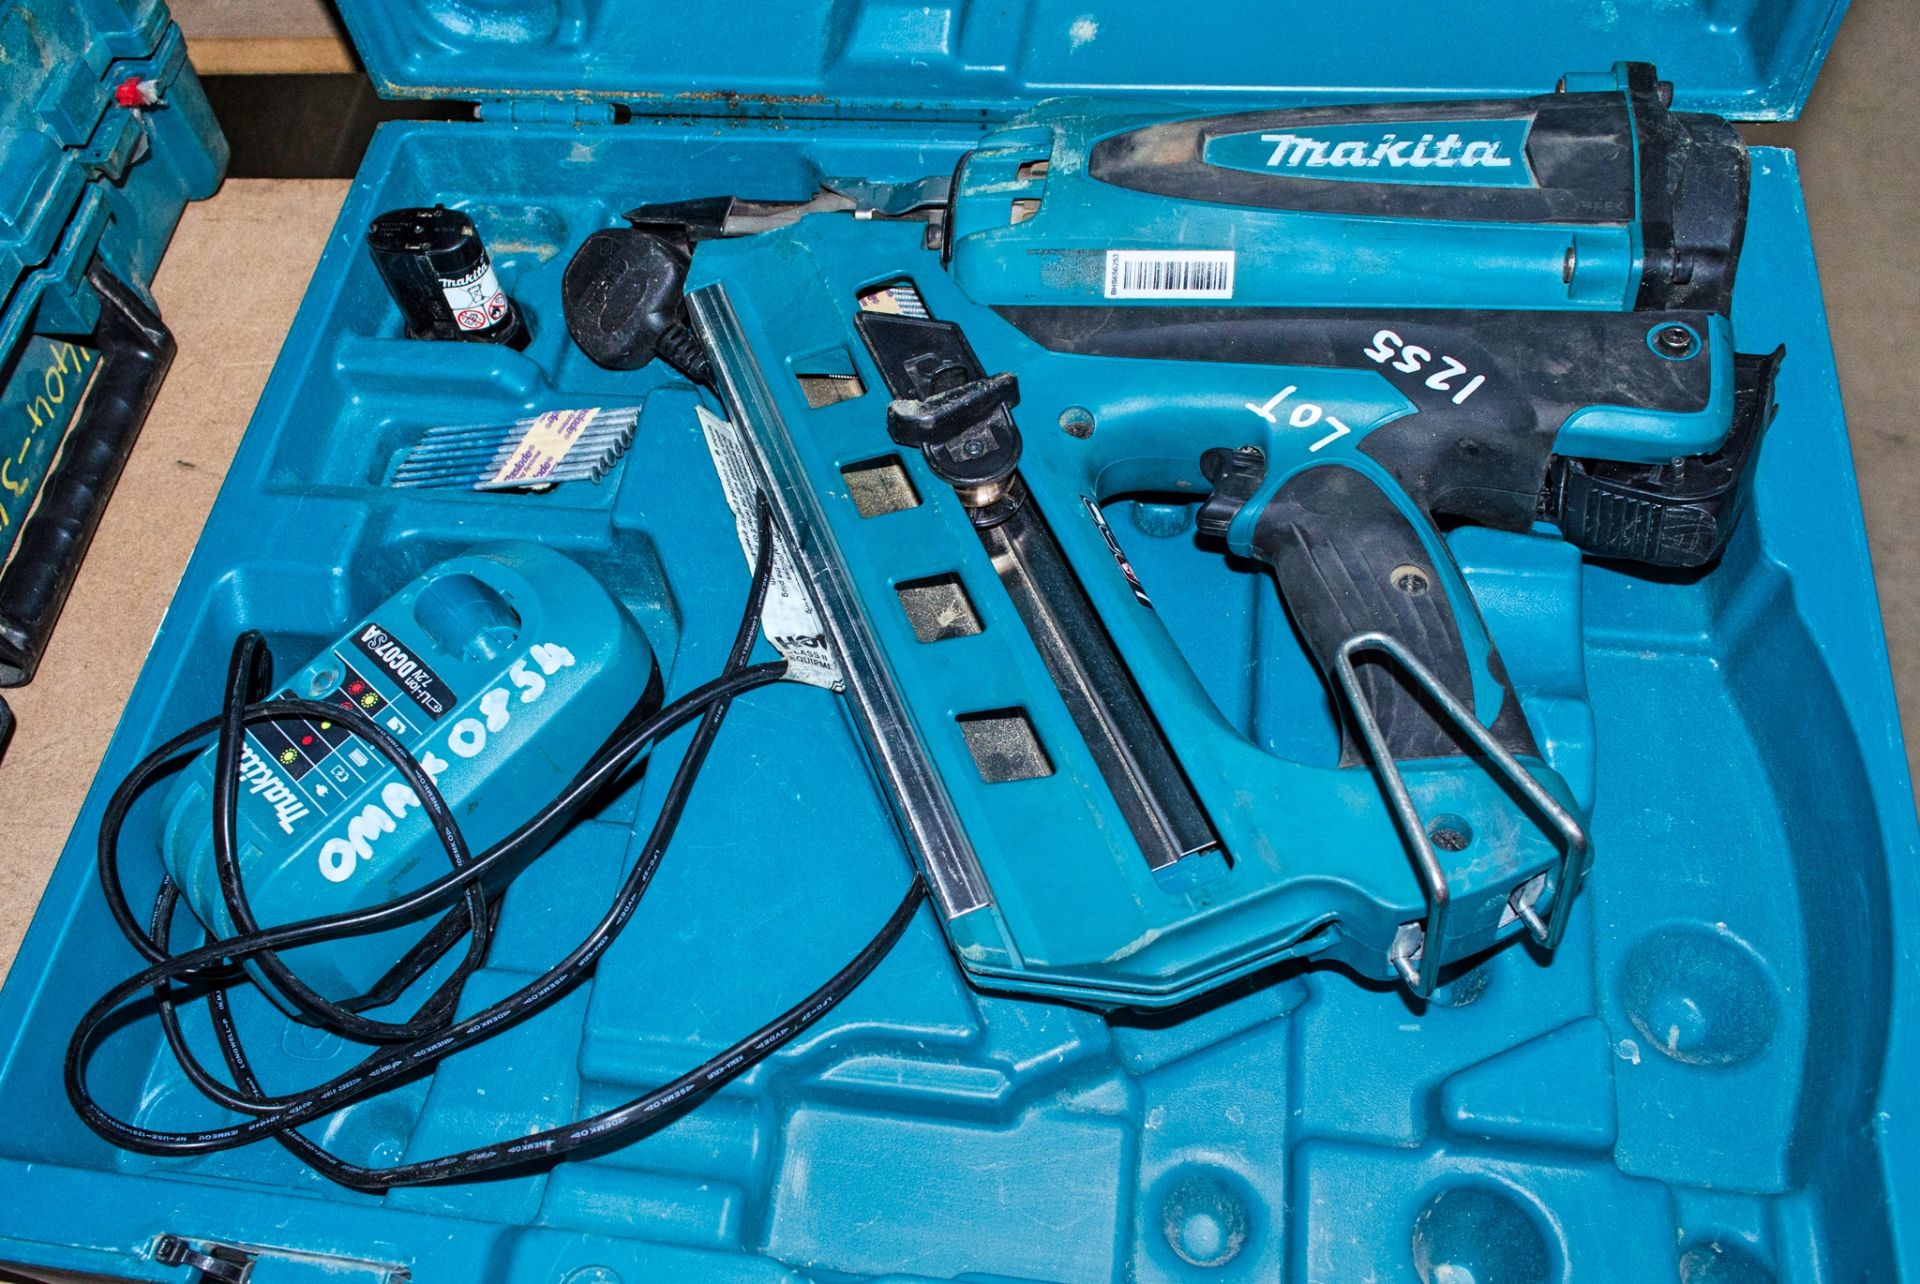 Makita GN900 7.2v cordless nail gun c/w carry case, battery and charger ** 0MAK0854